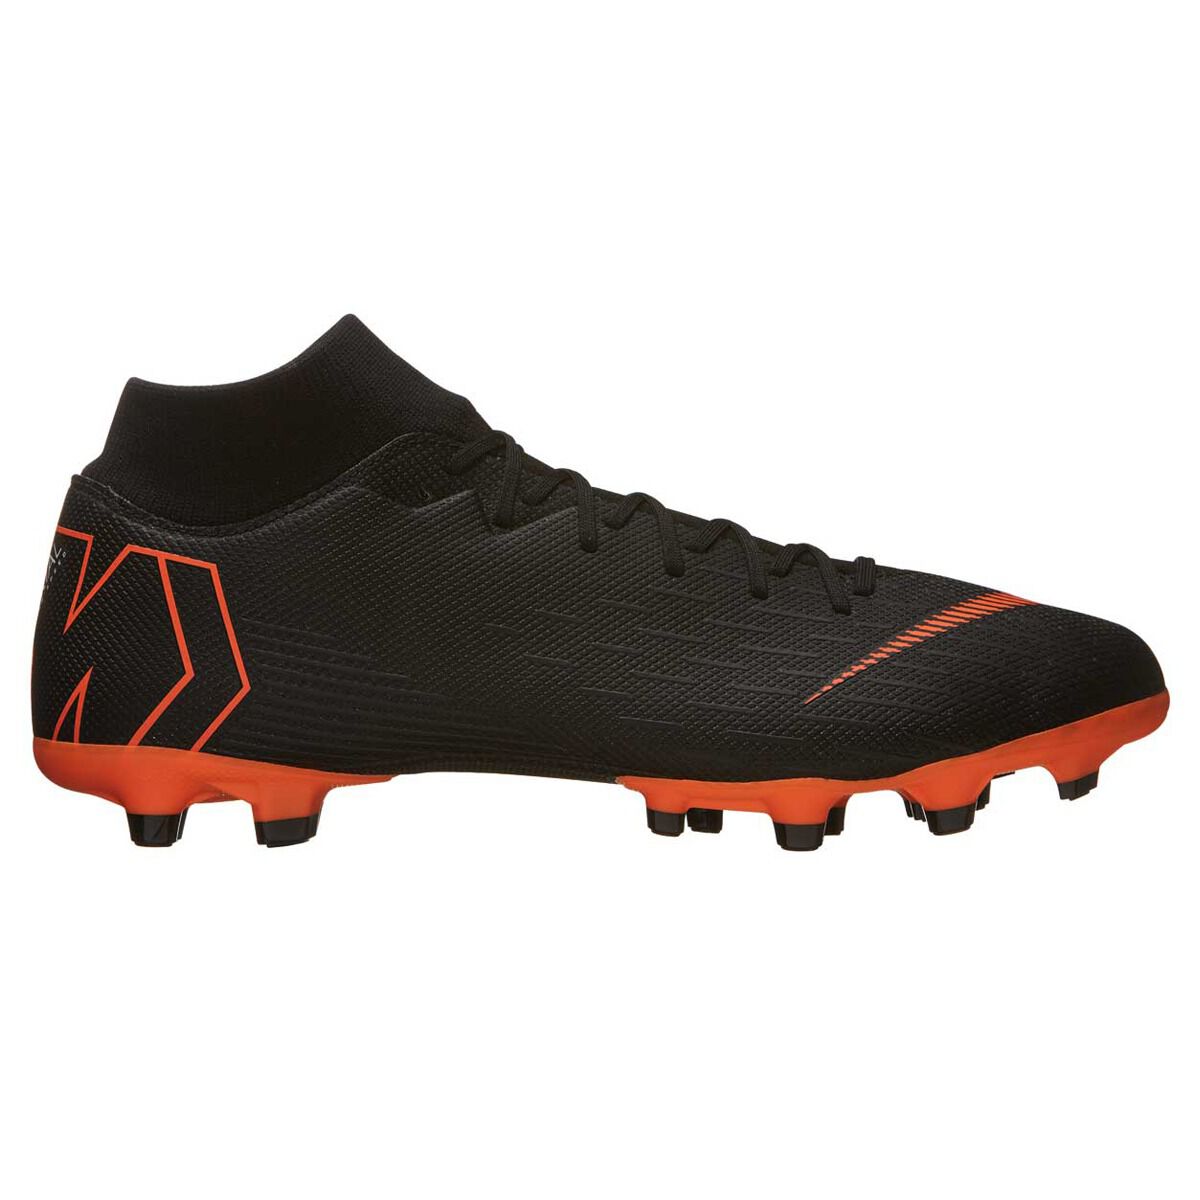 nike football boots black and orange